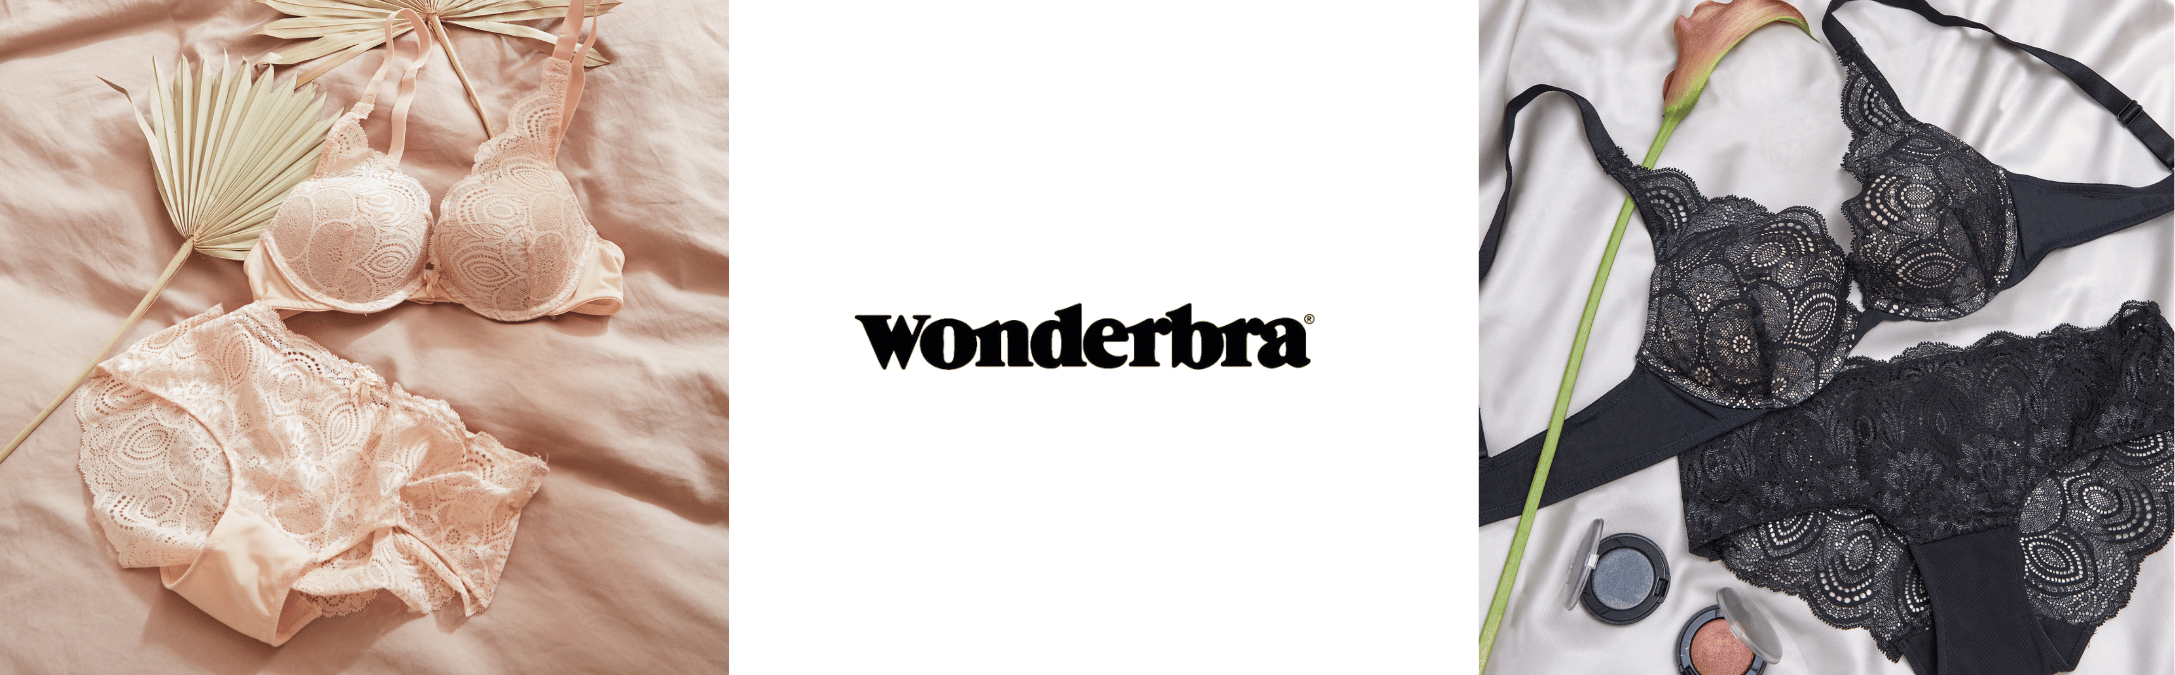 Wonderbra ultimate strapless lace - Gem